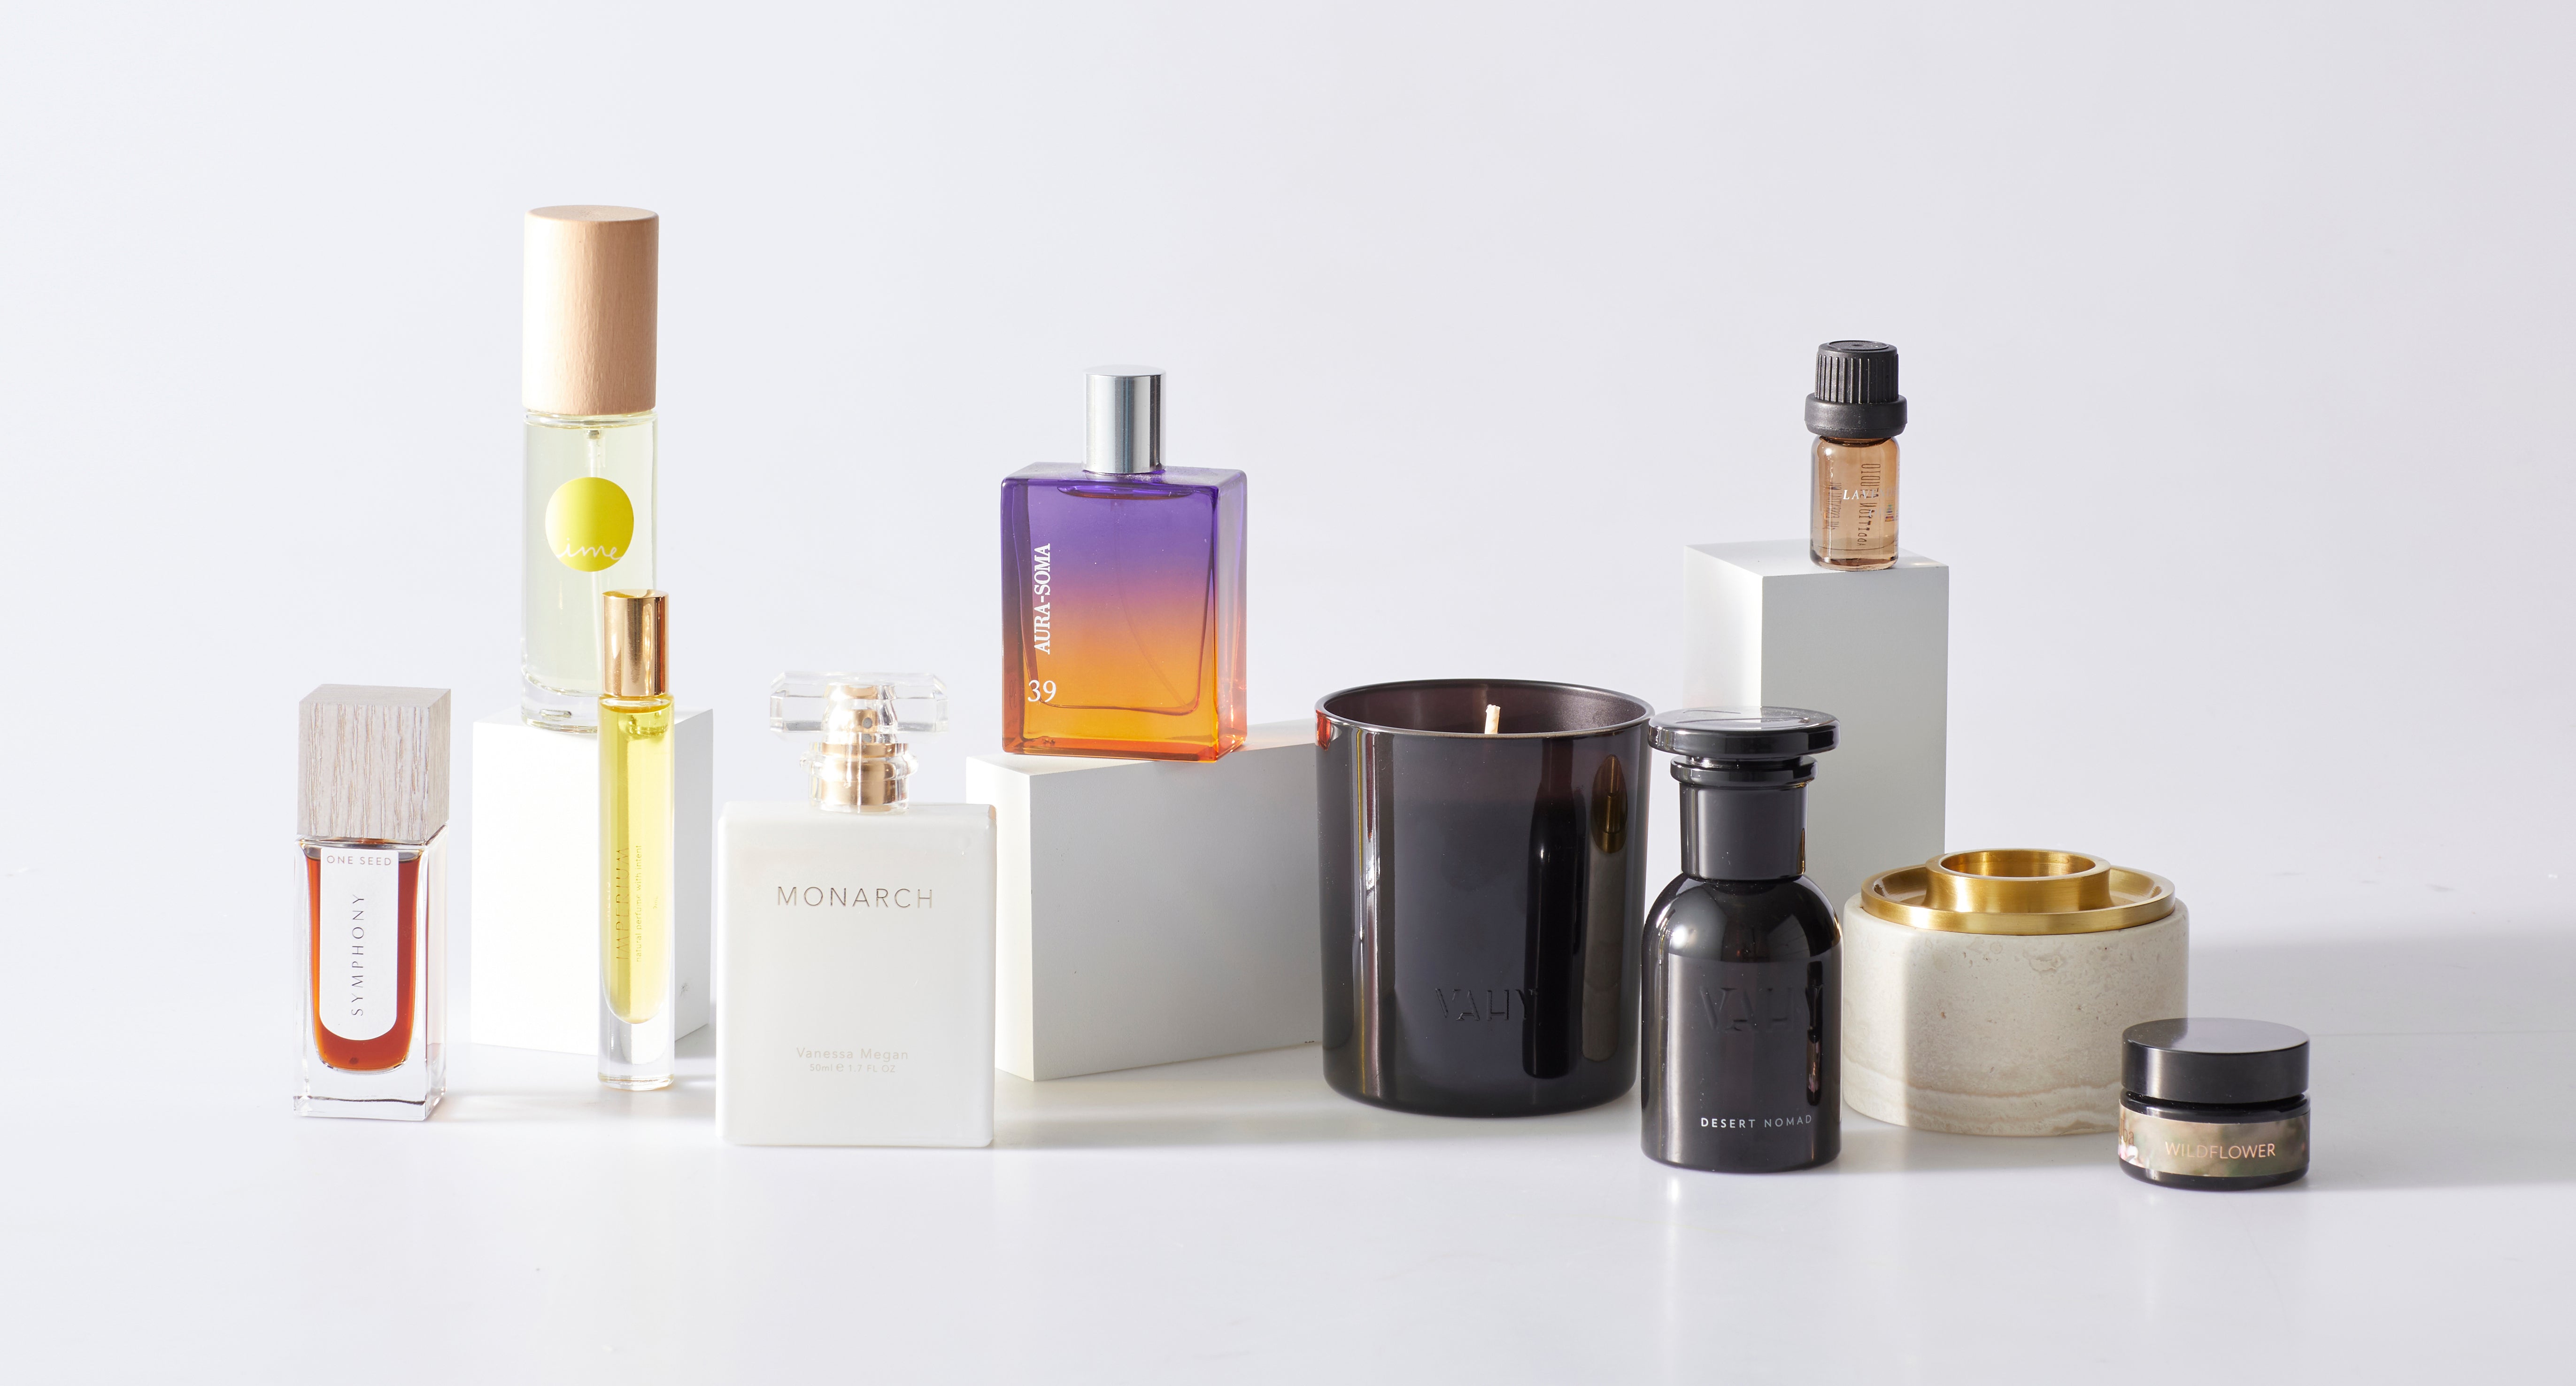 Sensoriam range of natural perfumes and natural home fragrances